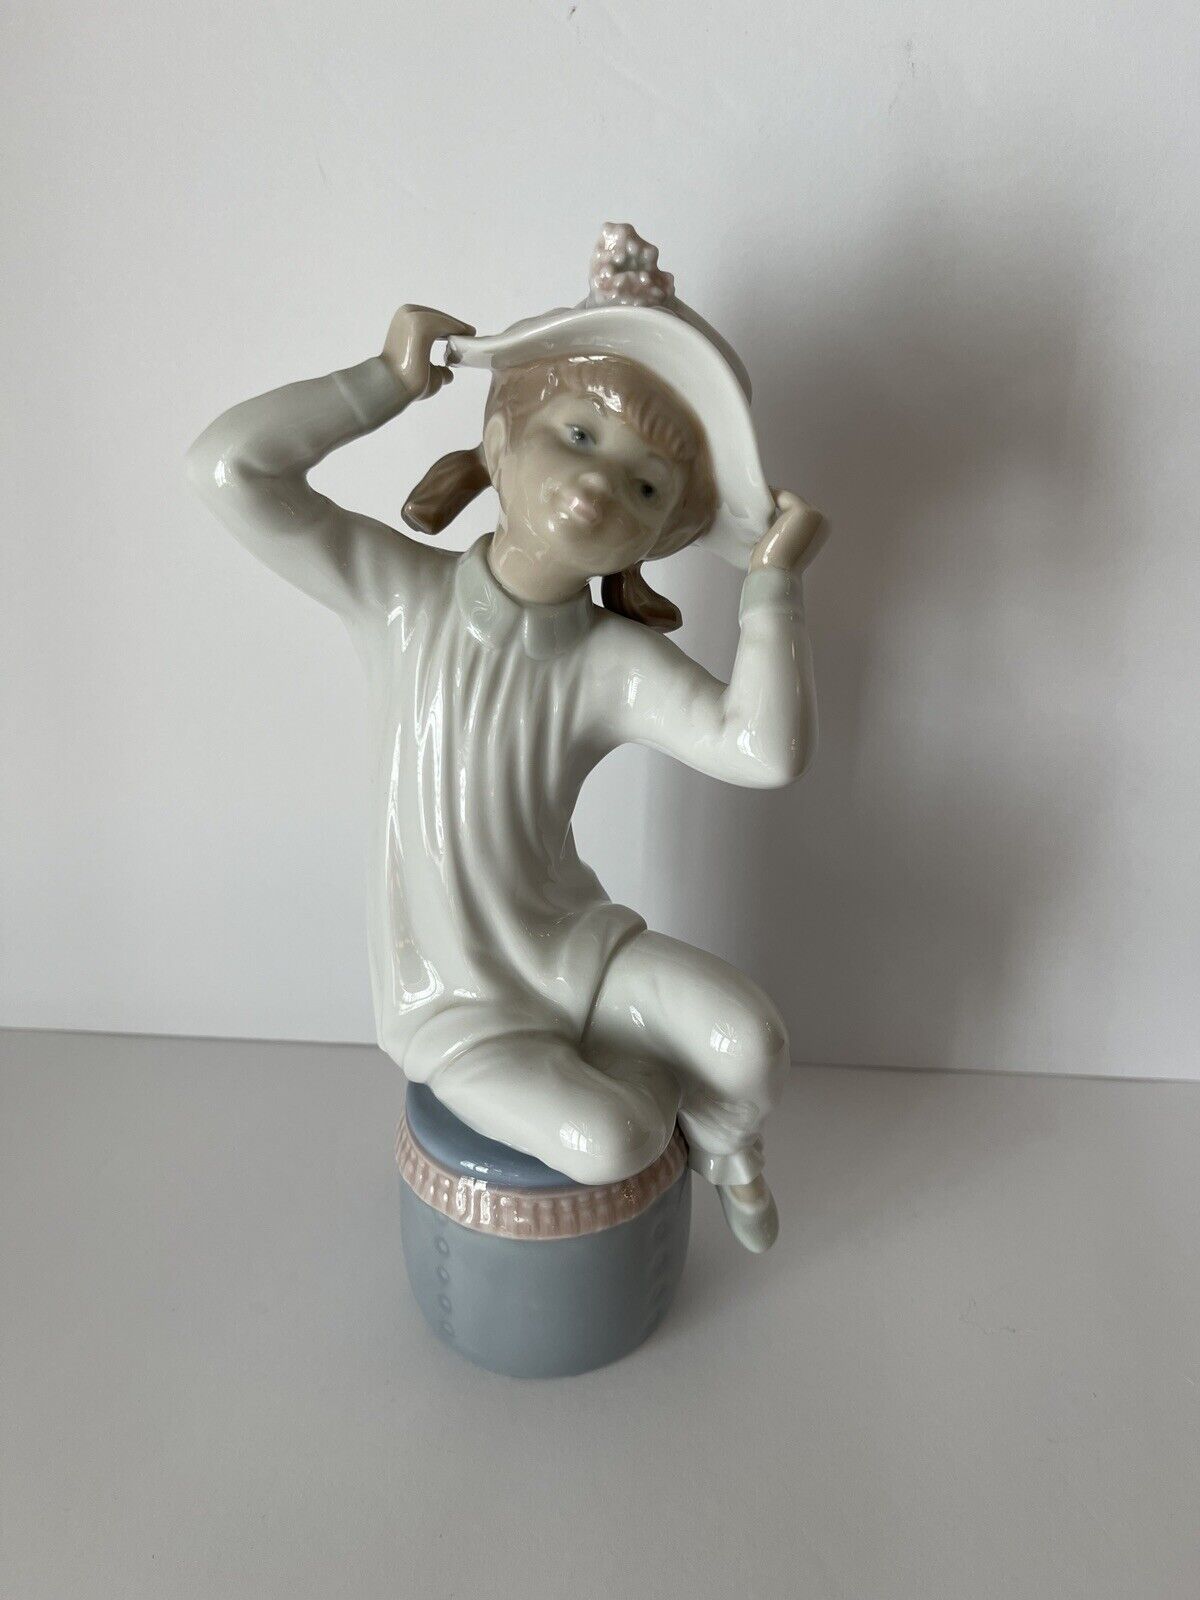 EXTREMELY RARE, UNCATALOGUED Lladro Porcelain Figurine of Girl Pigtails Vintage